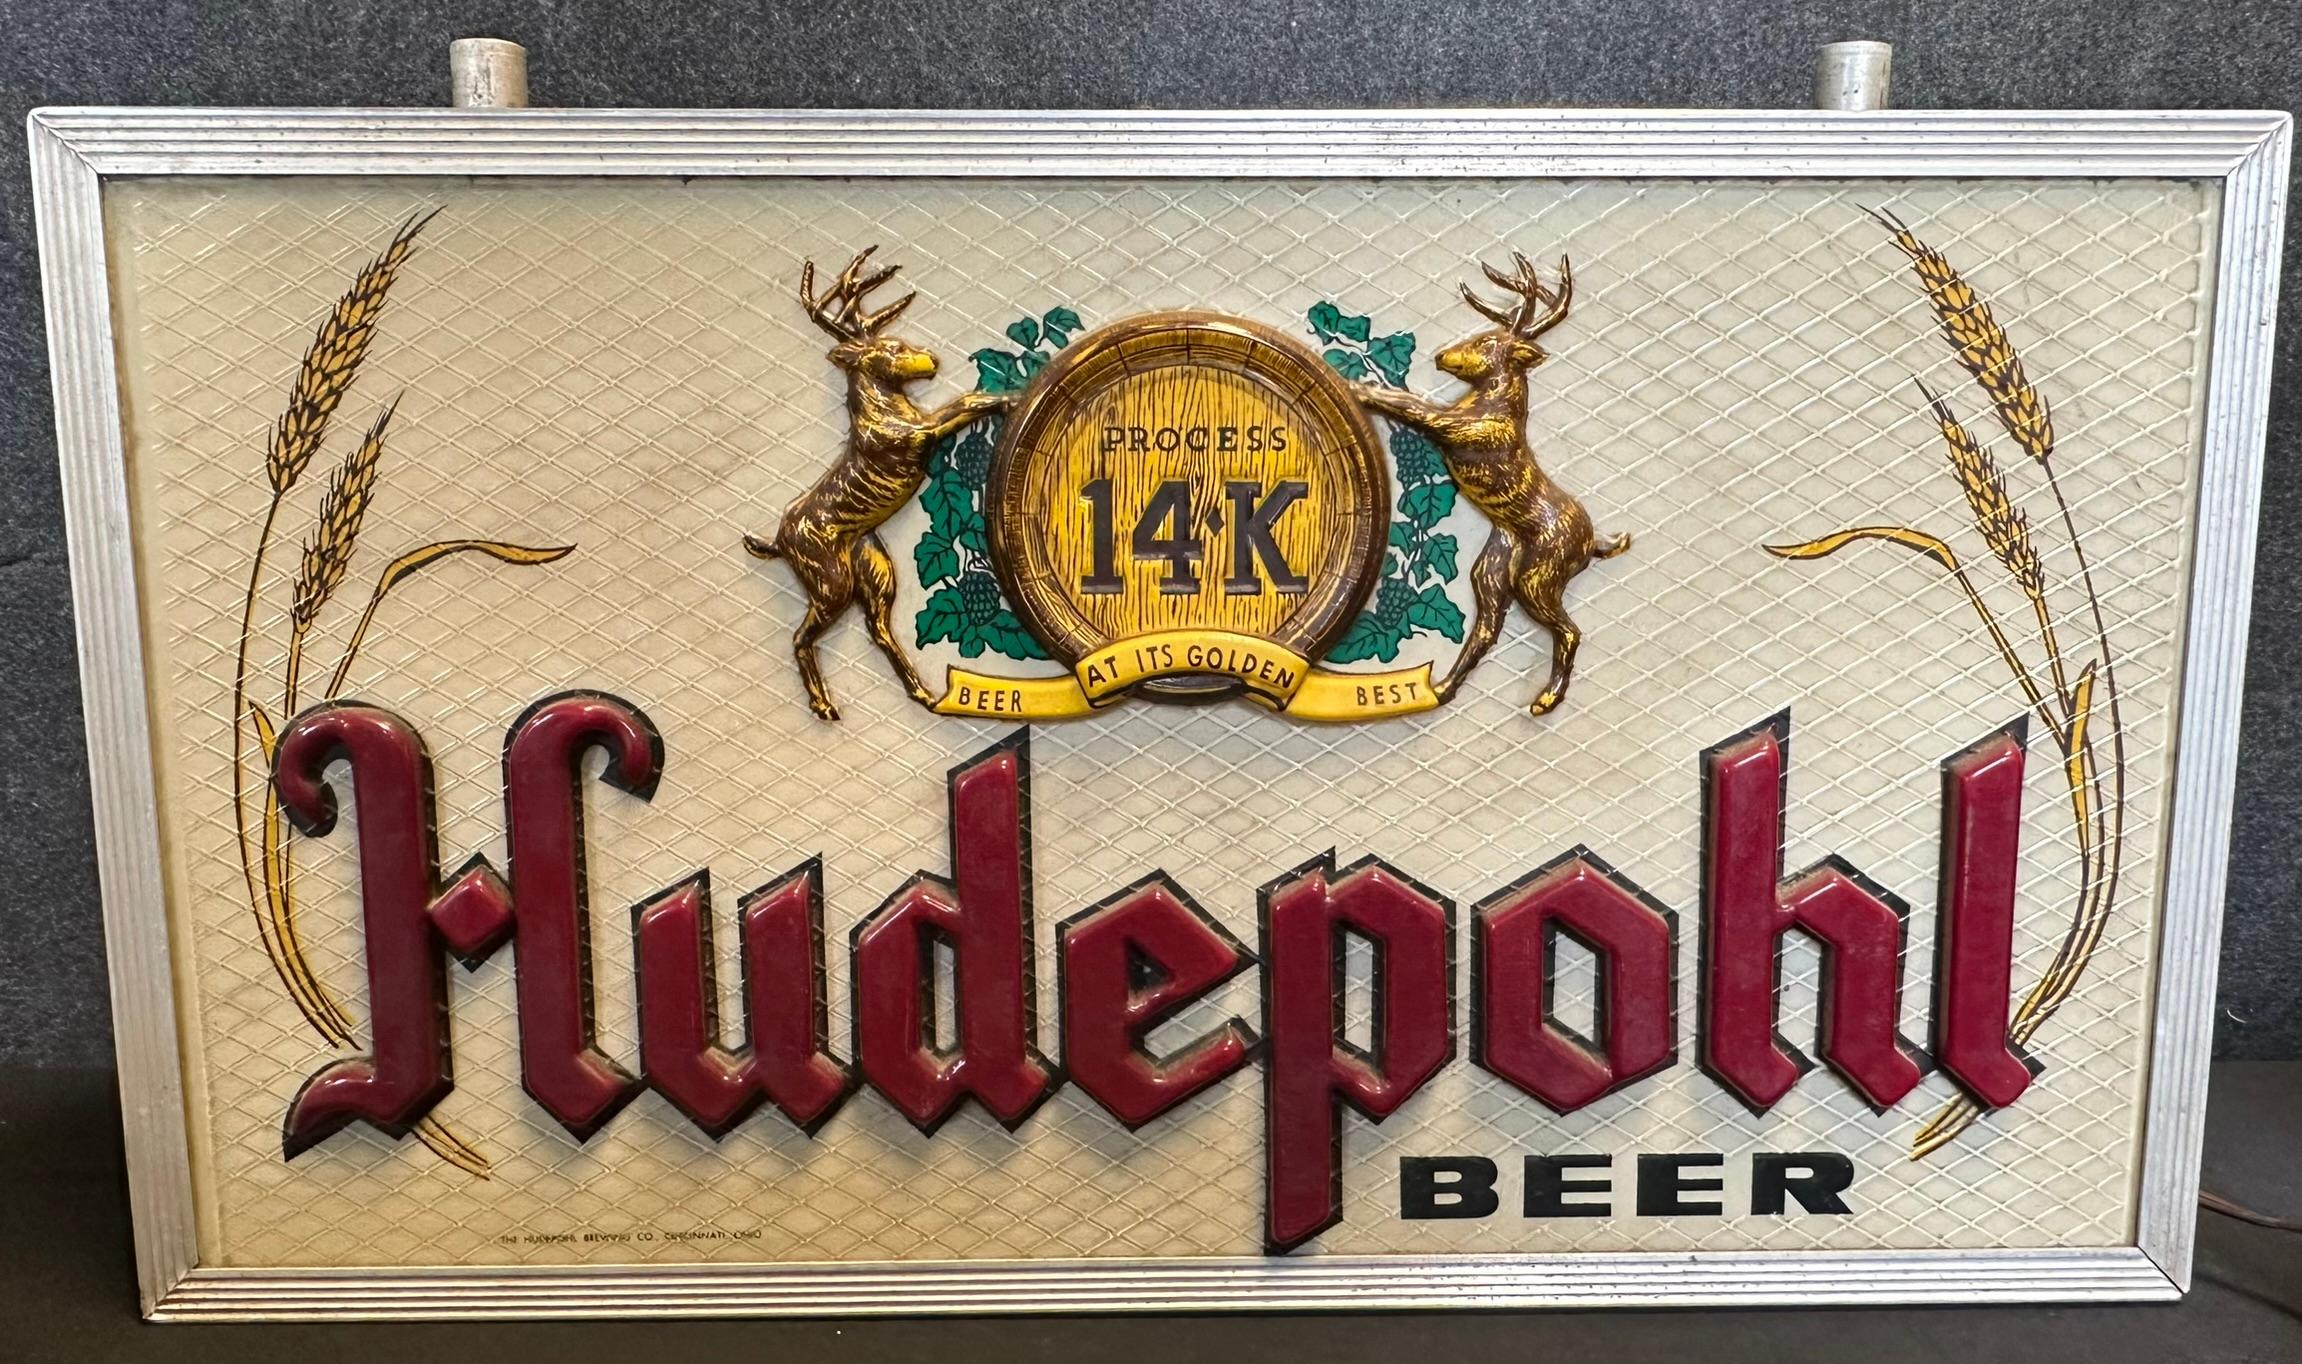 1960s Hudepohl Beer Hanging Lighted Advertising Bar Sign